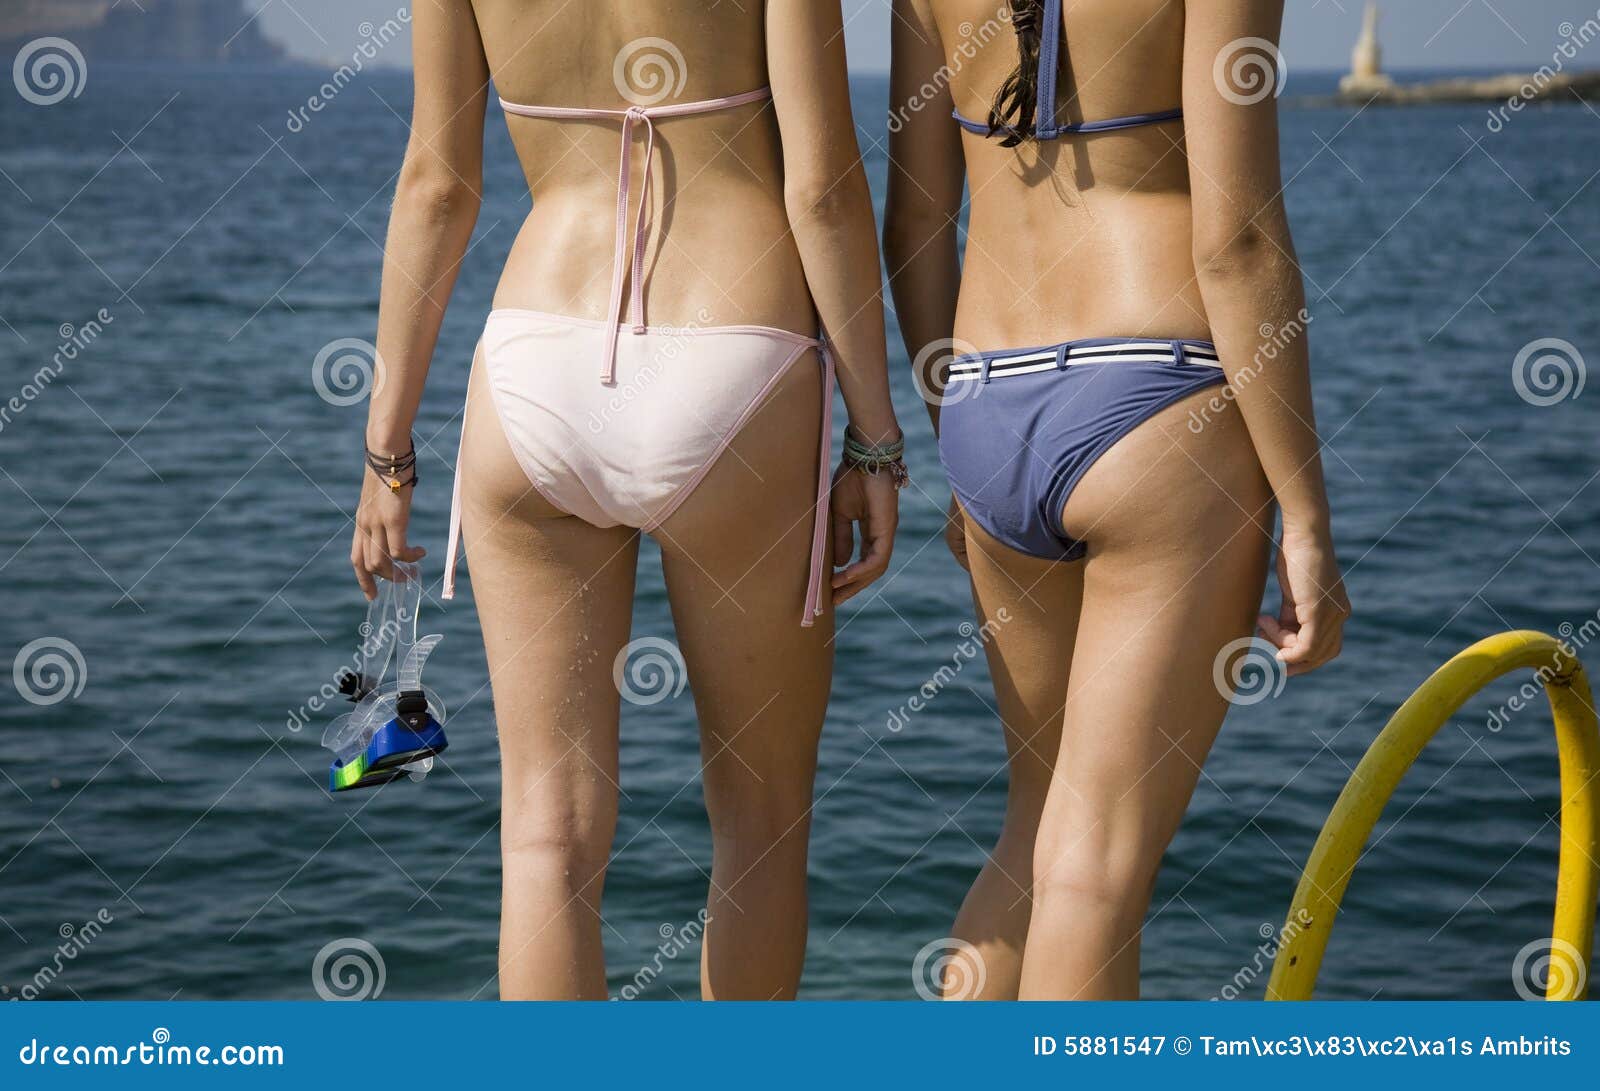 aurelia aurora recommends Topless Teens In Bikinis